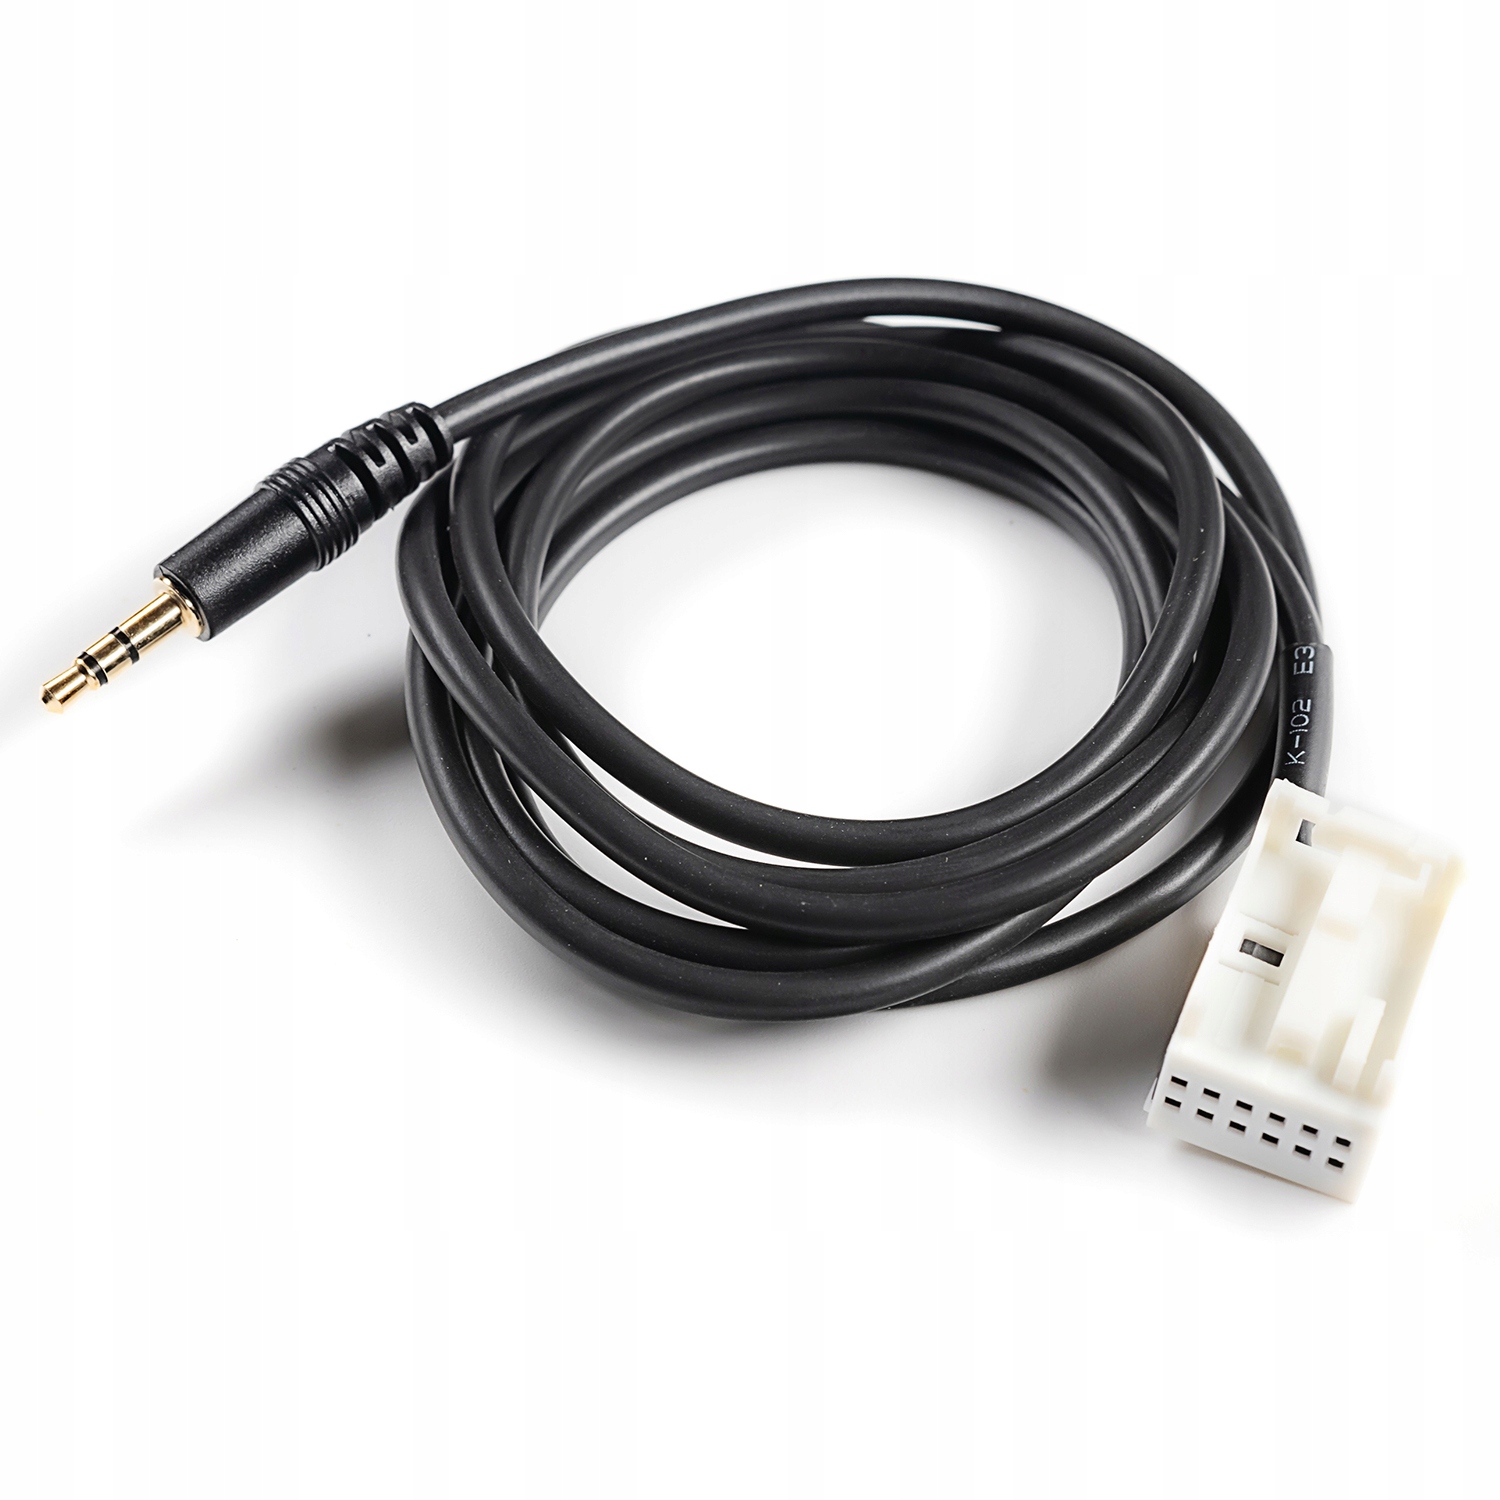 Kabel Przewód Adapter Aux Citroen C2 C3 C4 C5 C8 - Sklep Internetowy Agd I Rtv - Allegro.pl